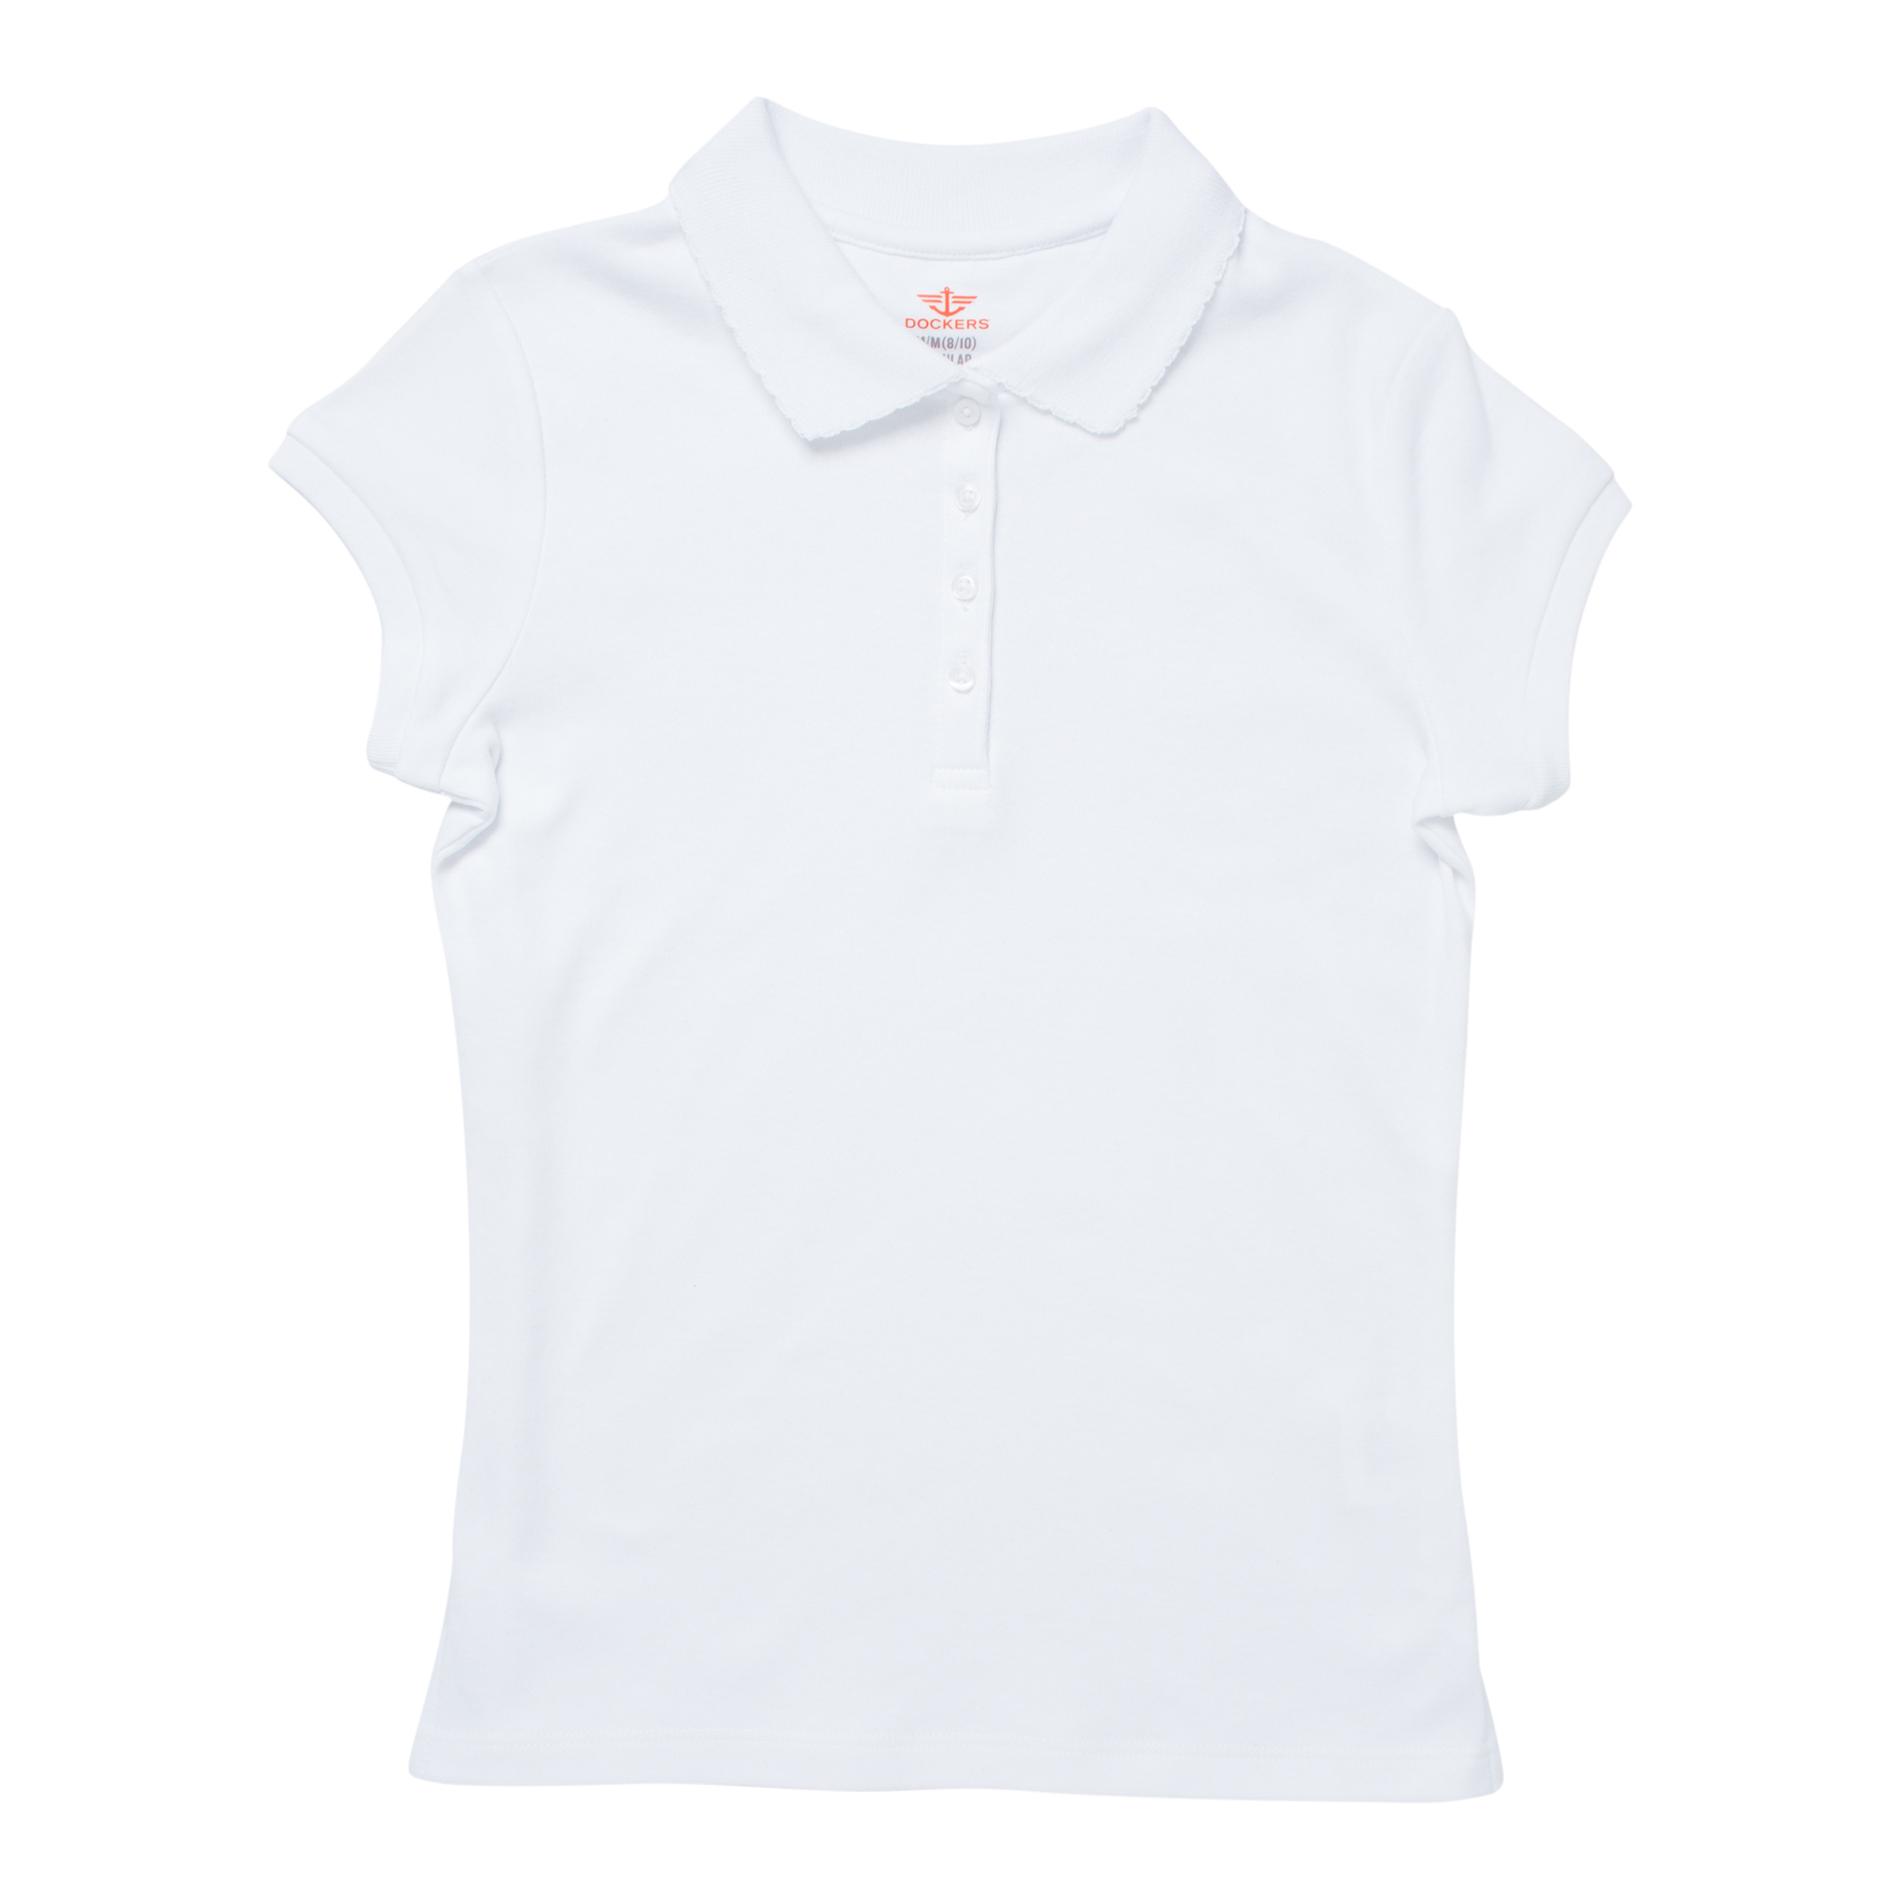 Dockers Girls' Short-Sleeve Polo Shirt